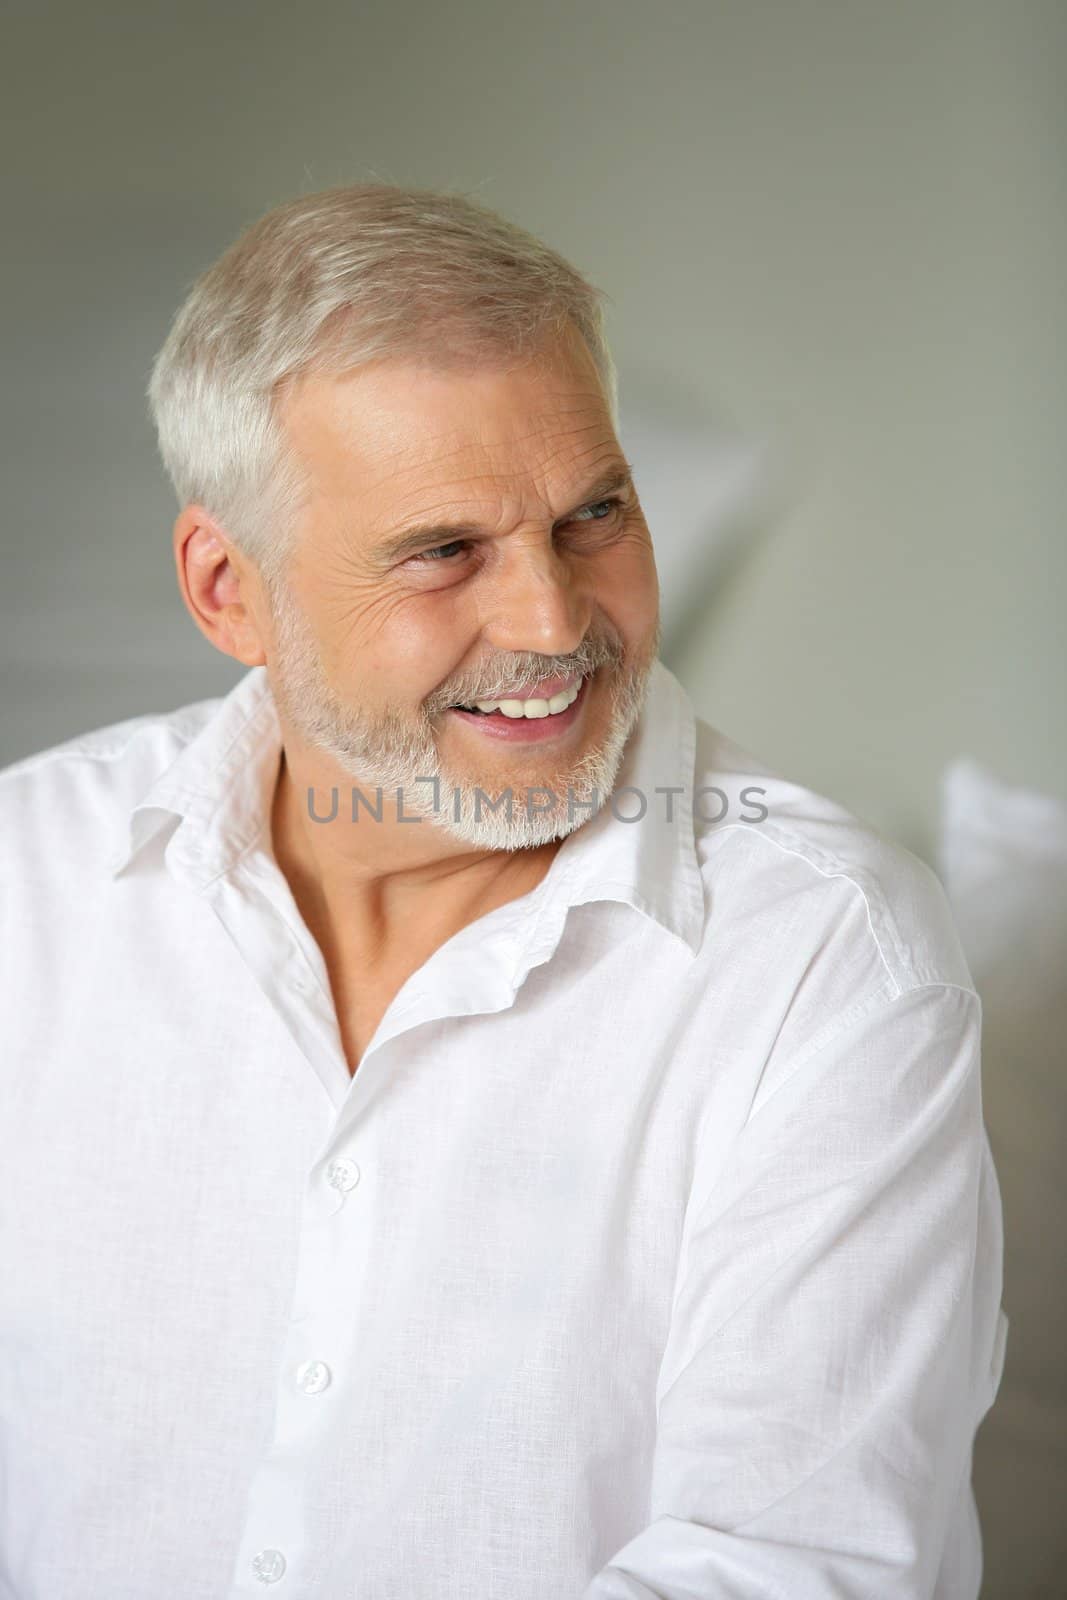 Smiling senior man by phovoir